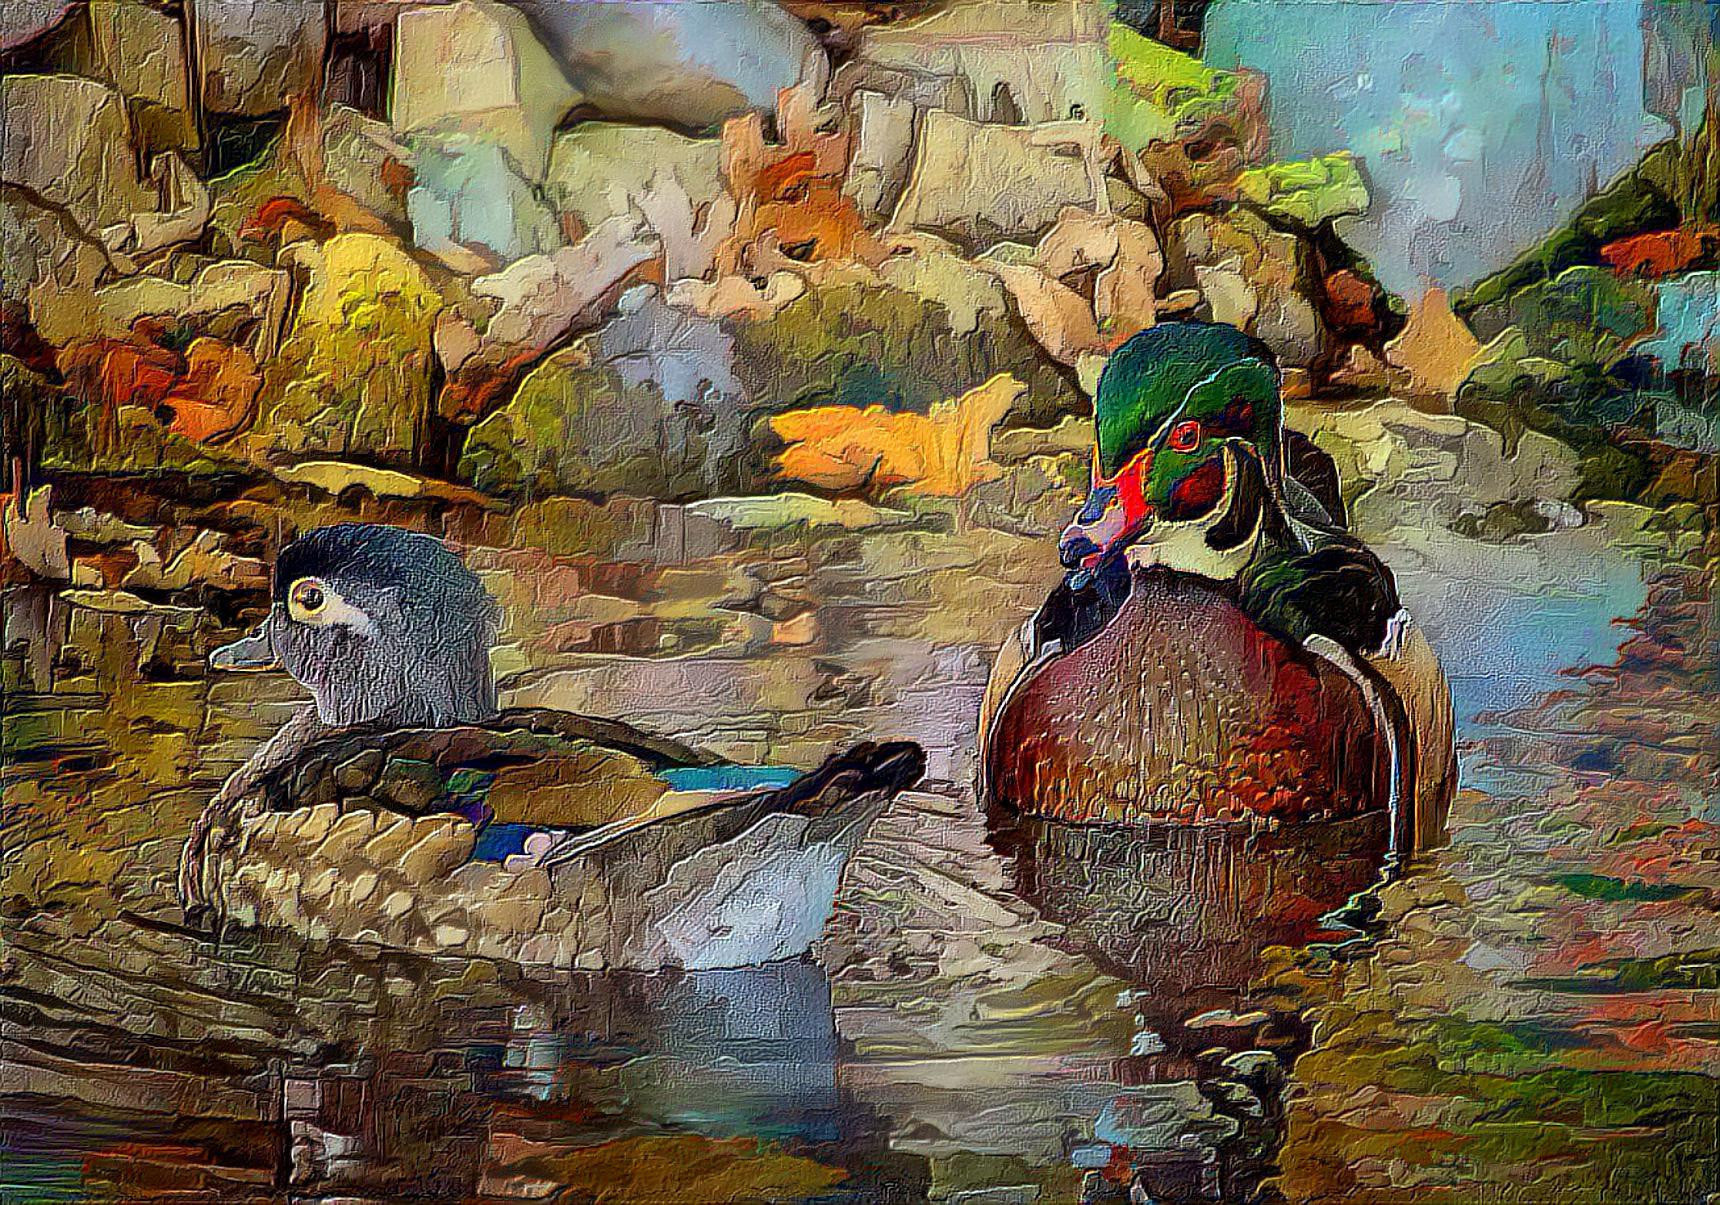 A Pair of Gorgeous Wood Ducks. Original photo by Jon Sailer on Unsplash.